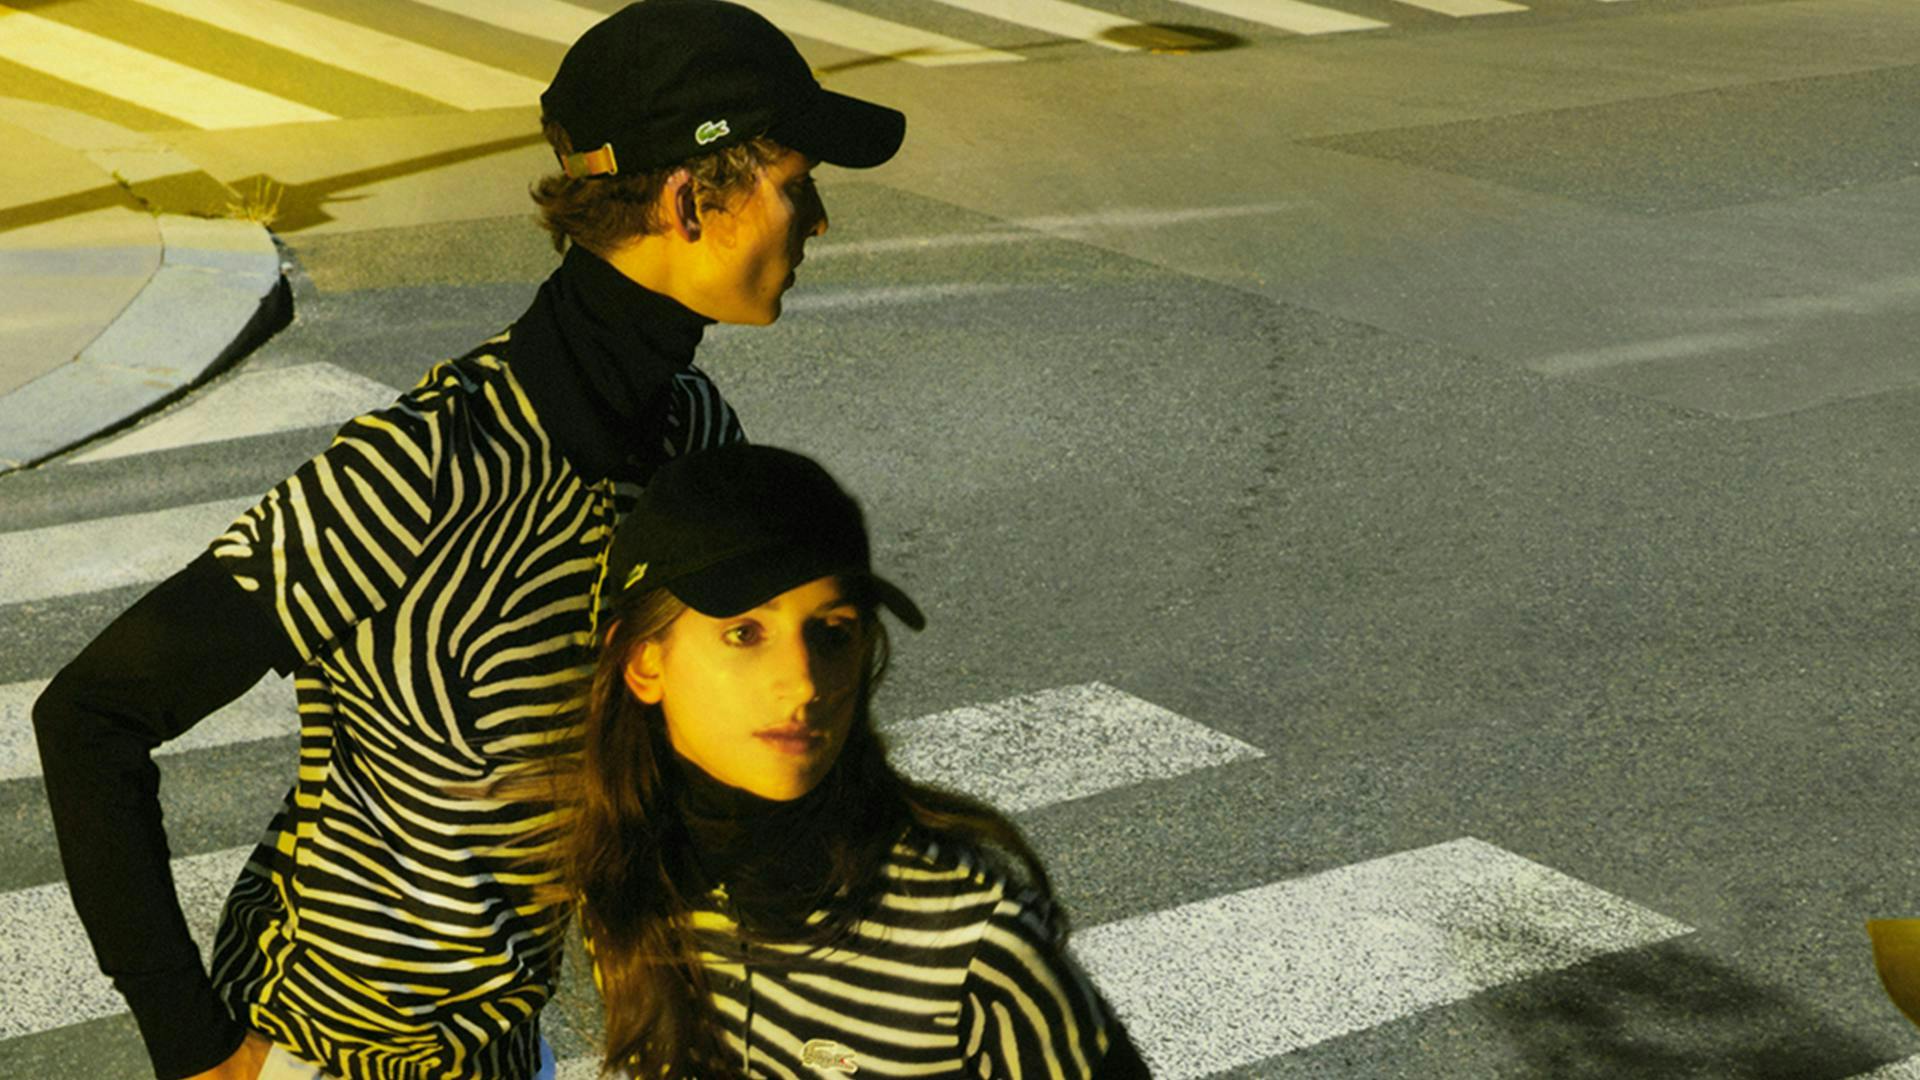 tarmac asphalt road person human zebra crossing clothing apparel hat